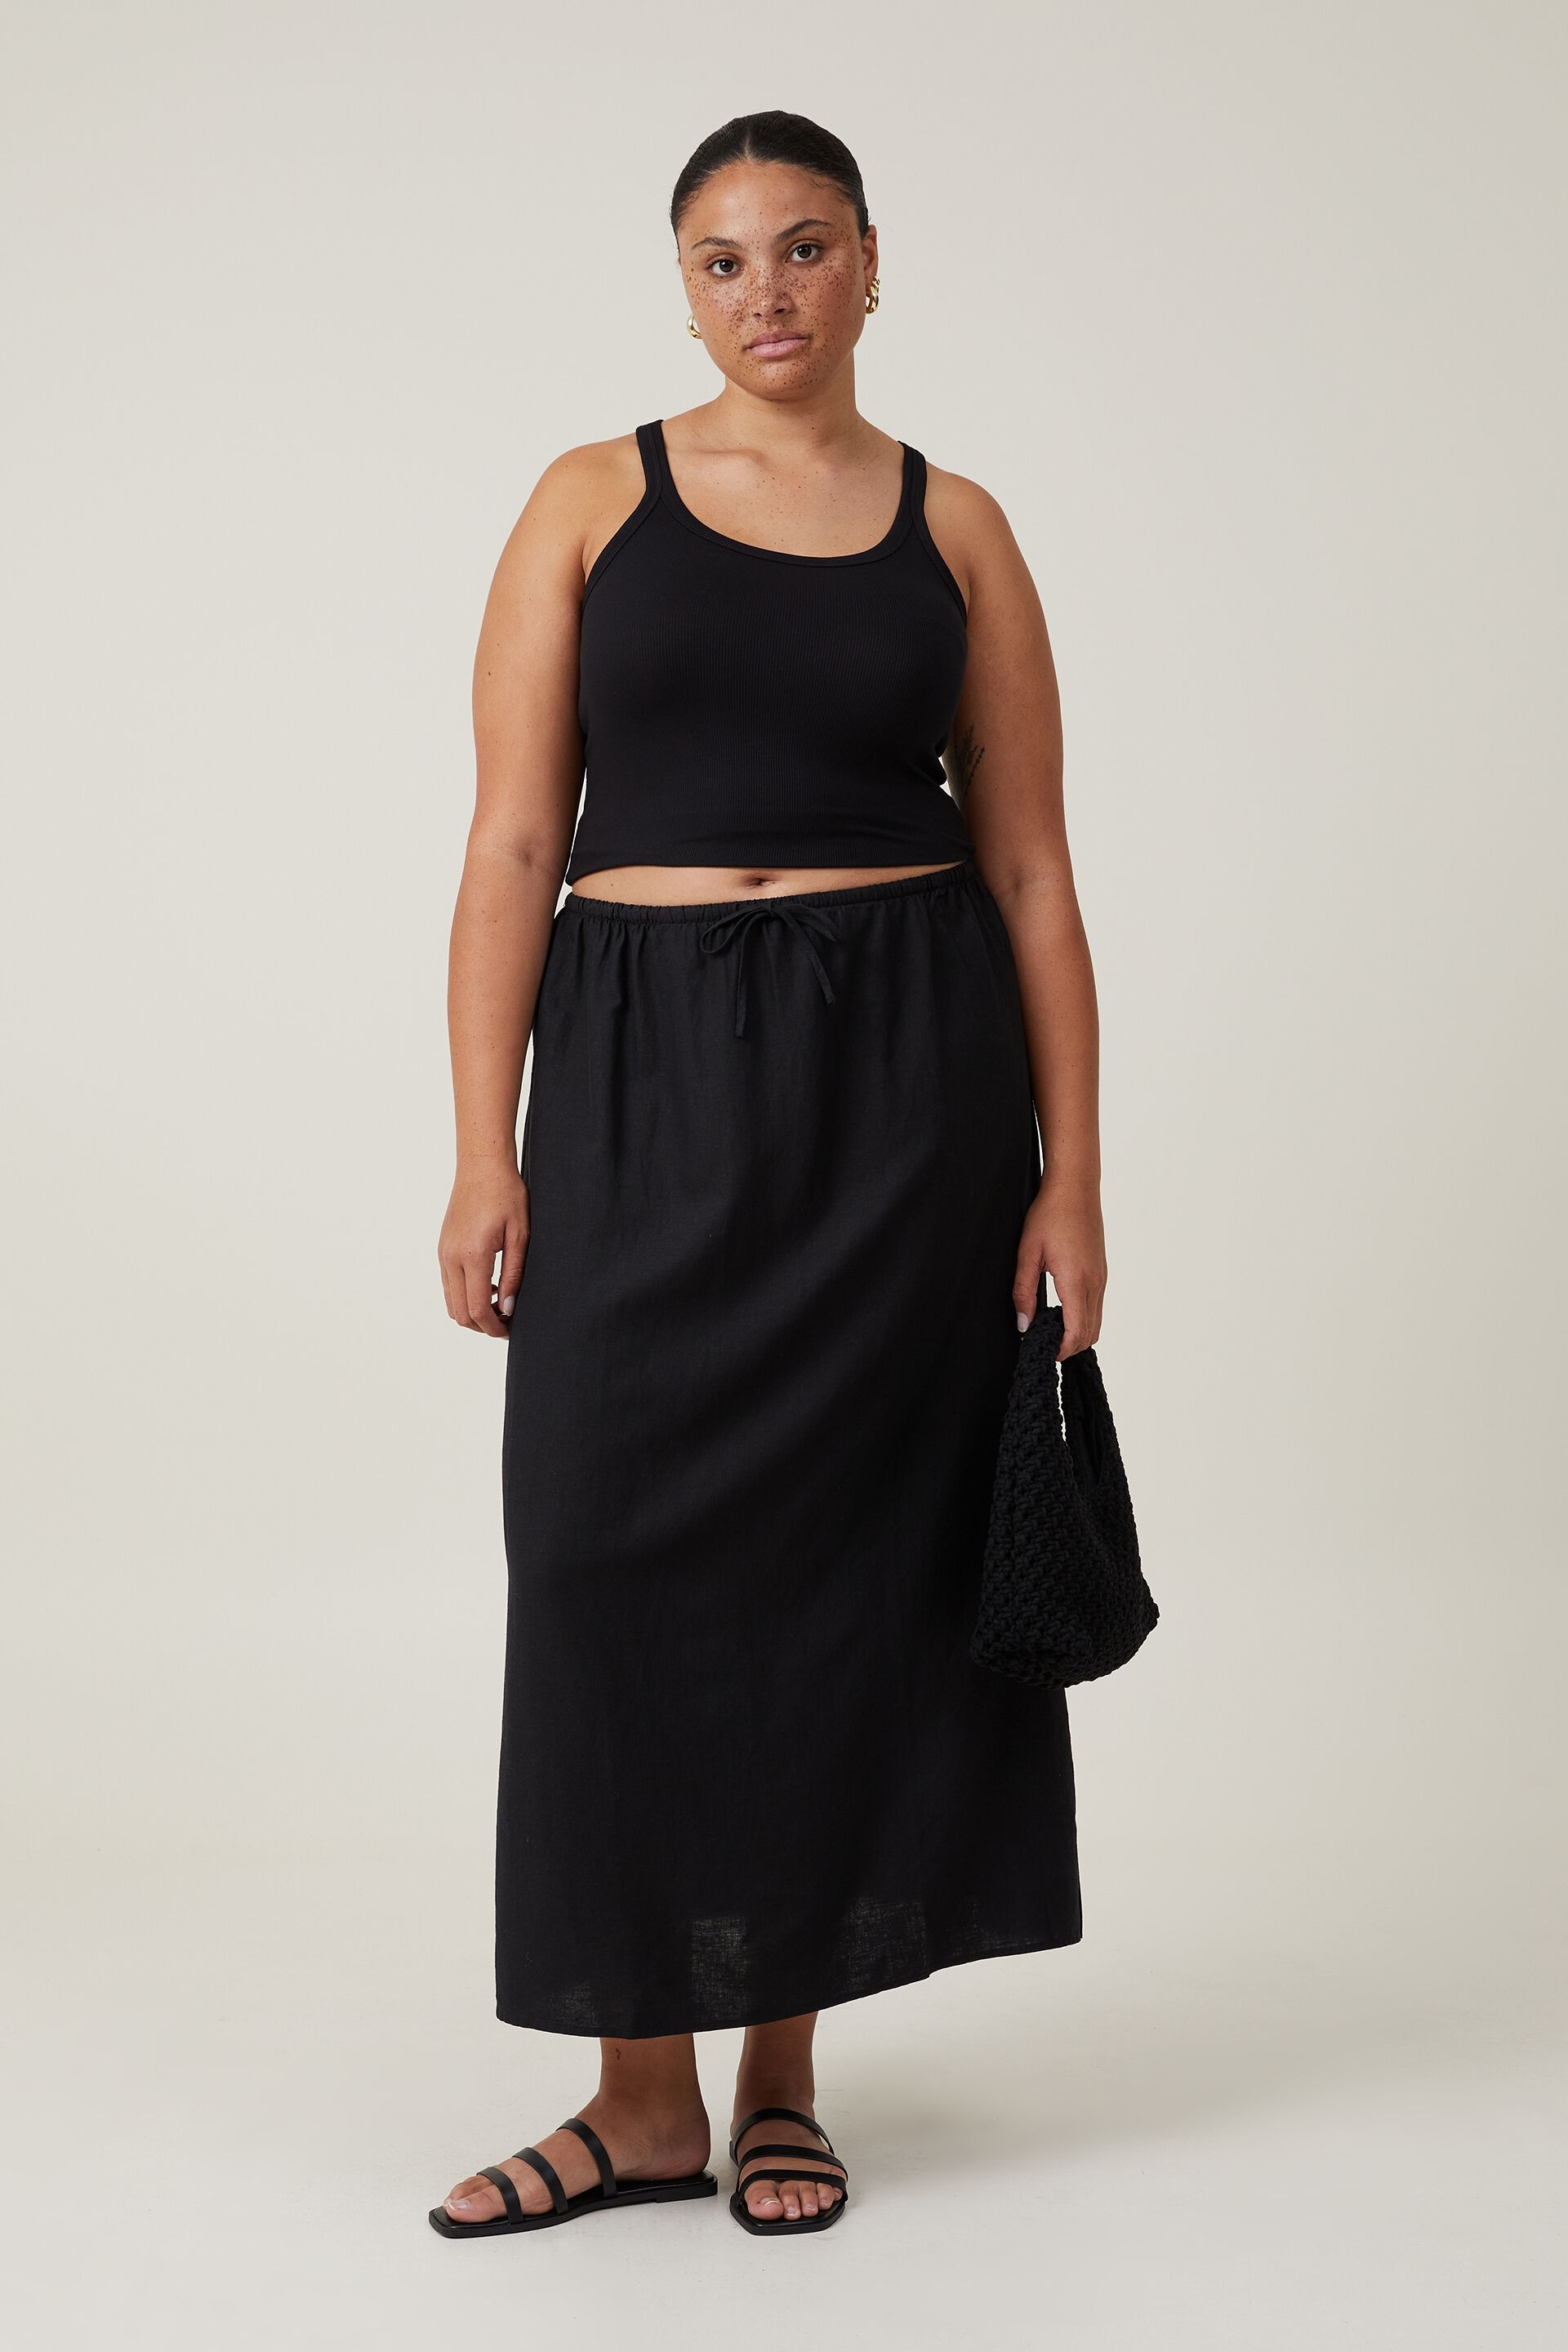 Celeb Style with Bullet Blues: Black Maxi Skirt